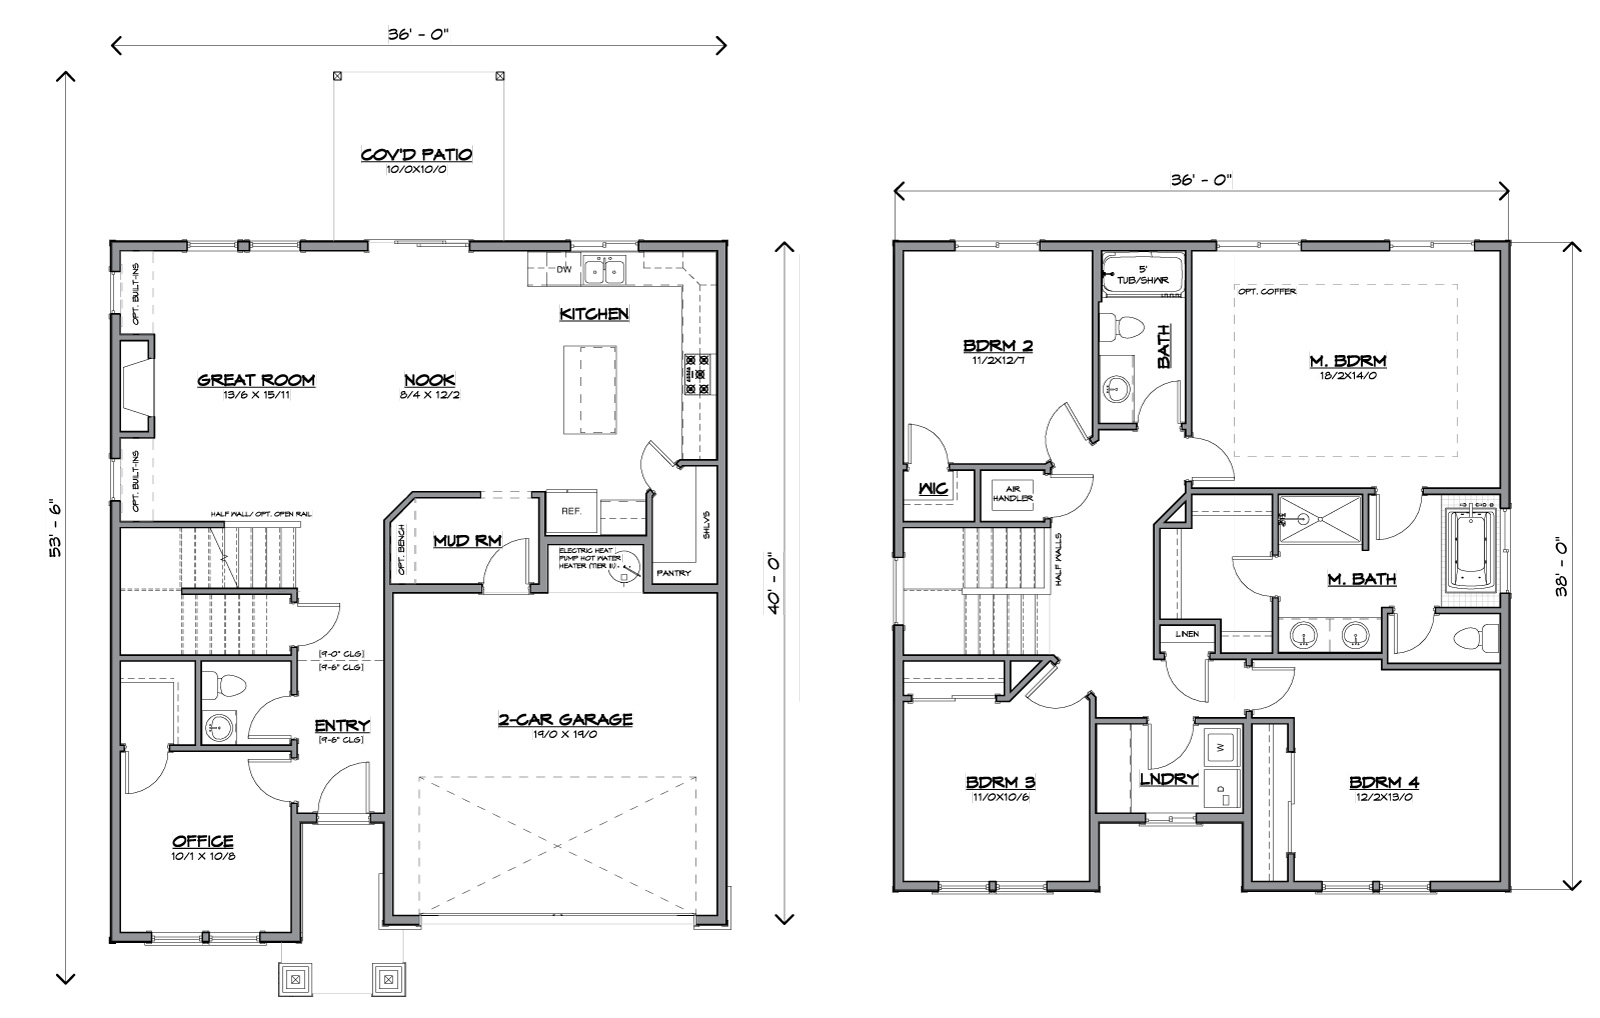 Floor plan of the Rockford home